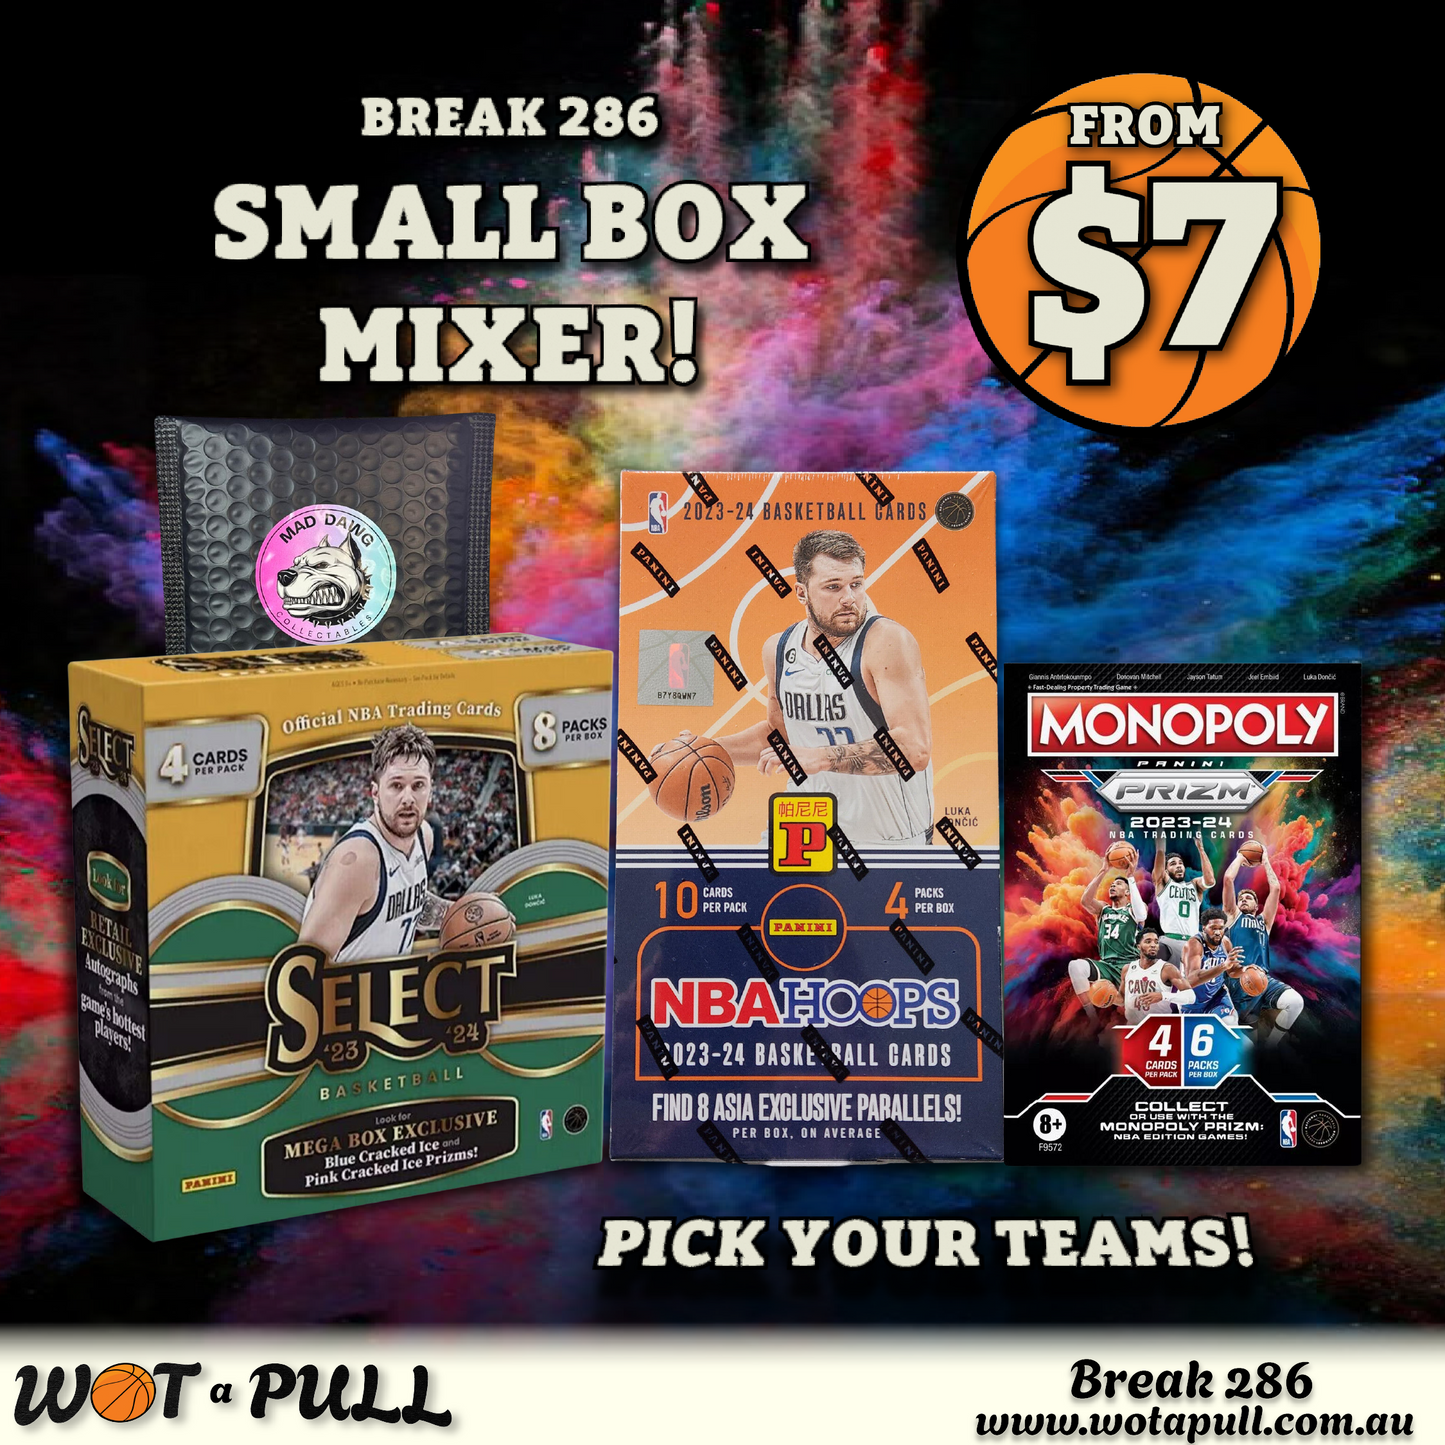 BREAK #286 2023-24 SMALL BOX MIXER!